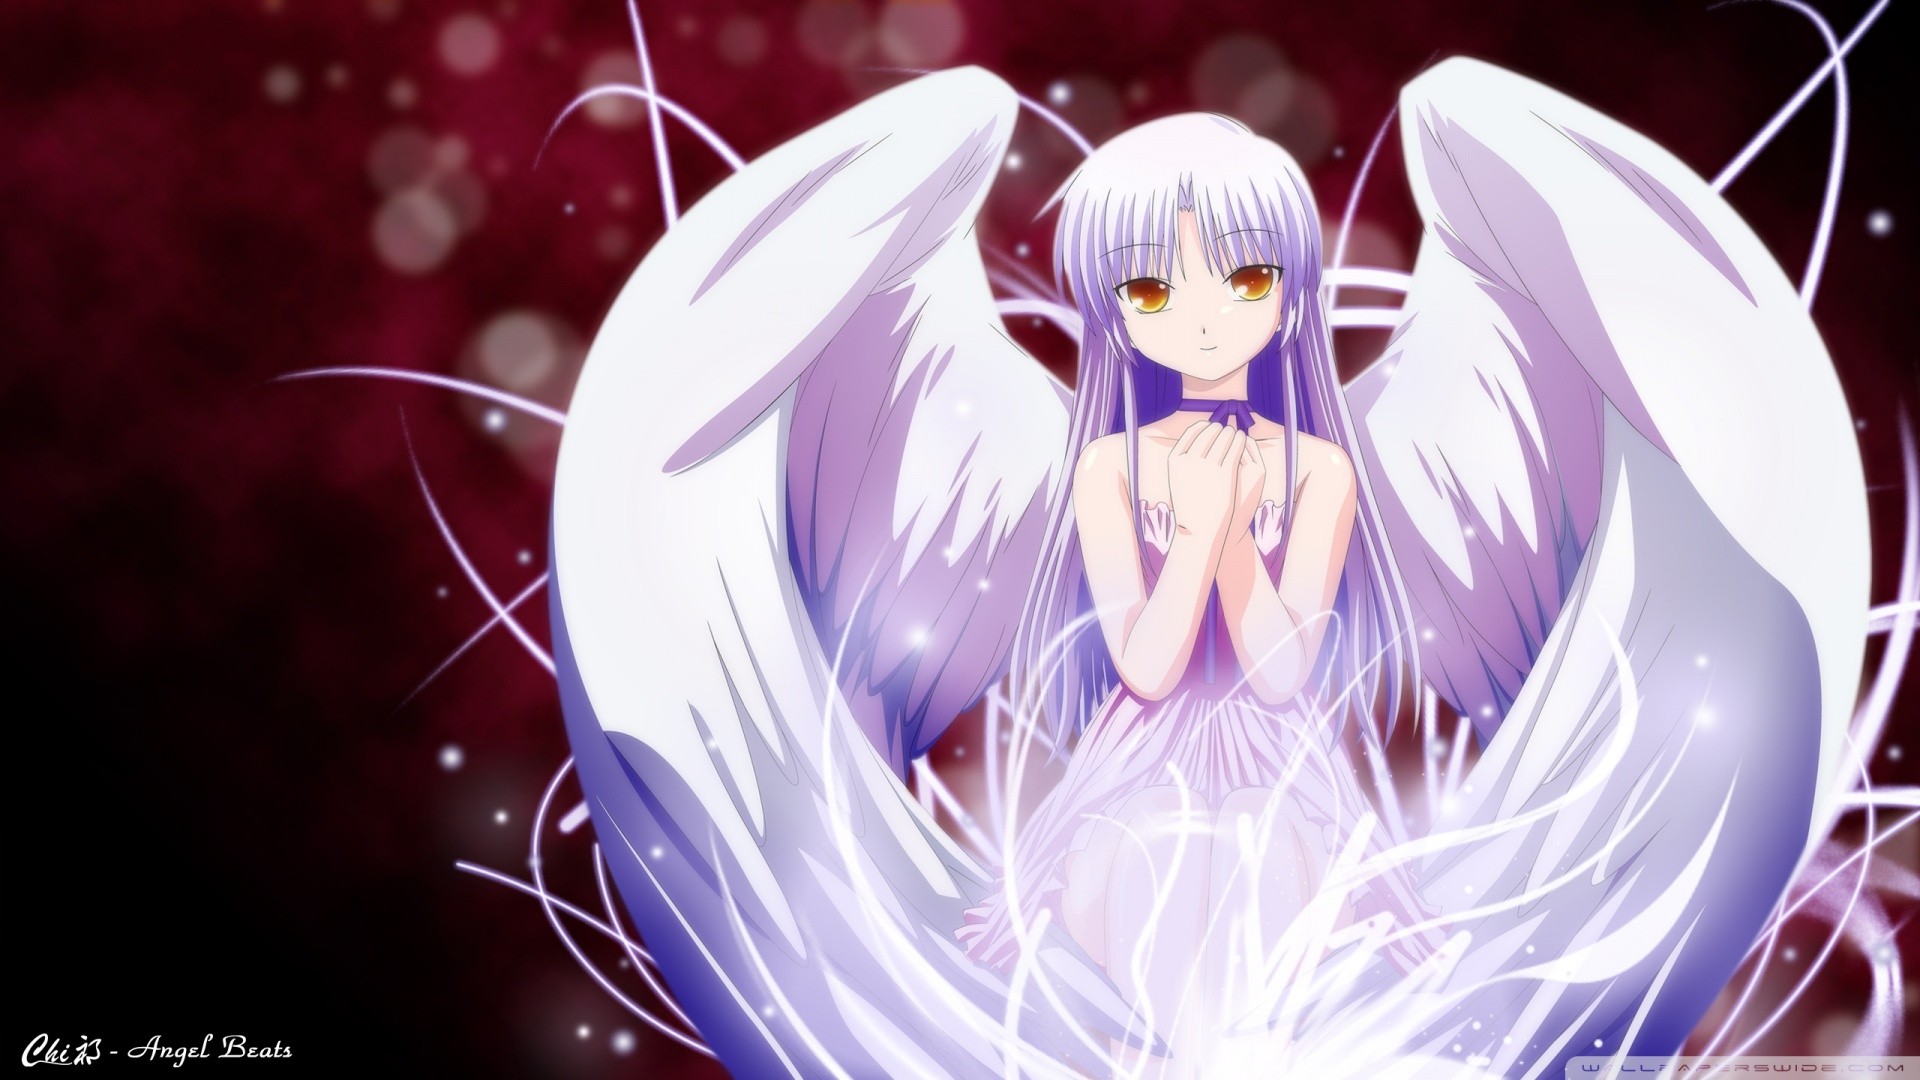 Angel Beats wallpaper ·① Download free amazing full HD ...